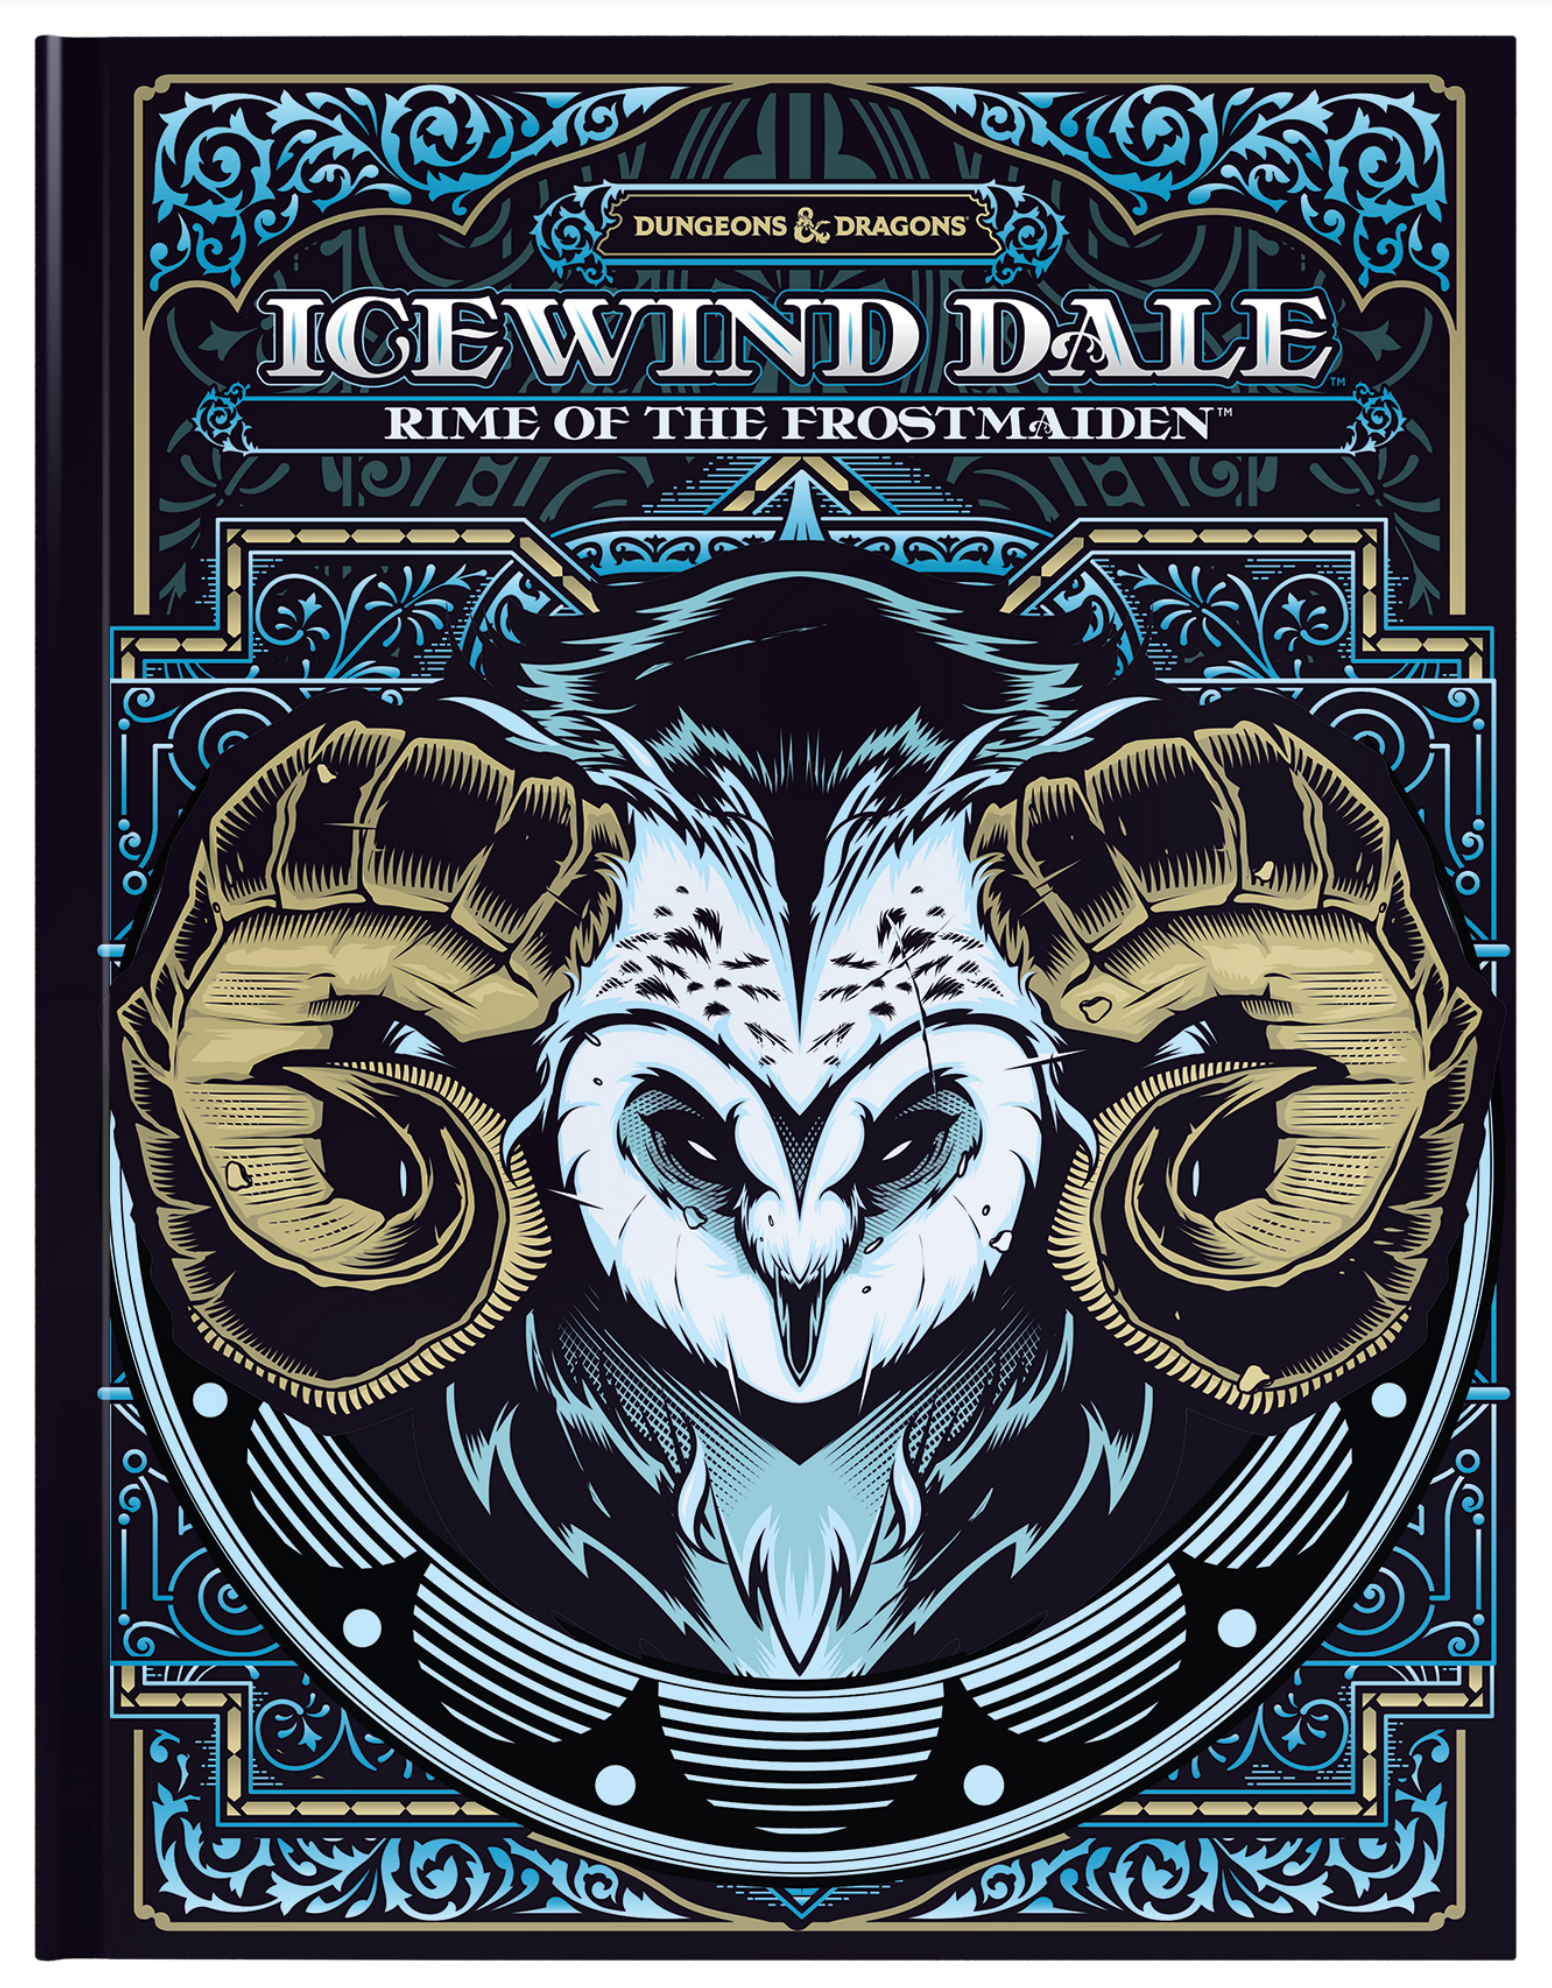 DnD icewind dale alternate cover